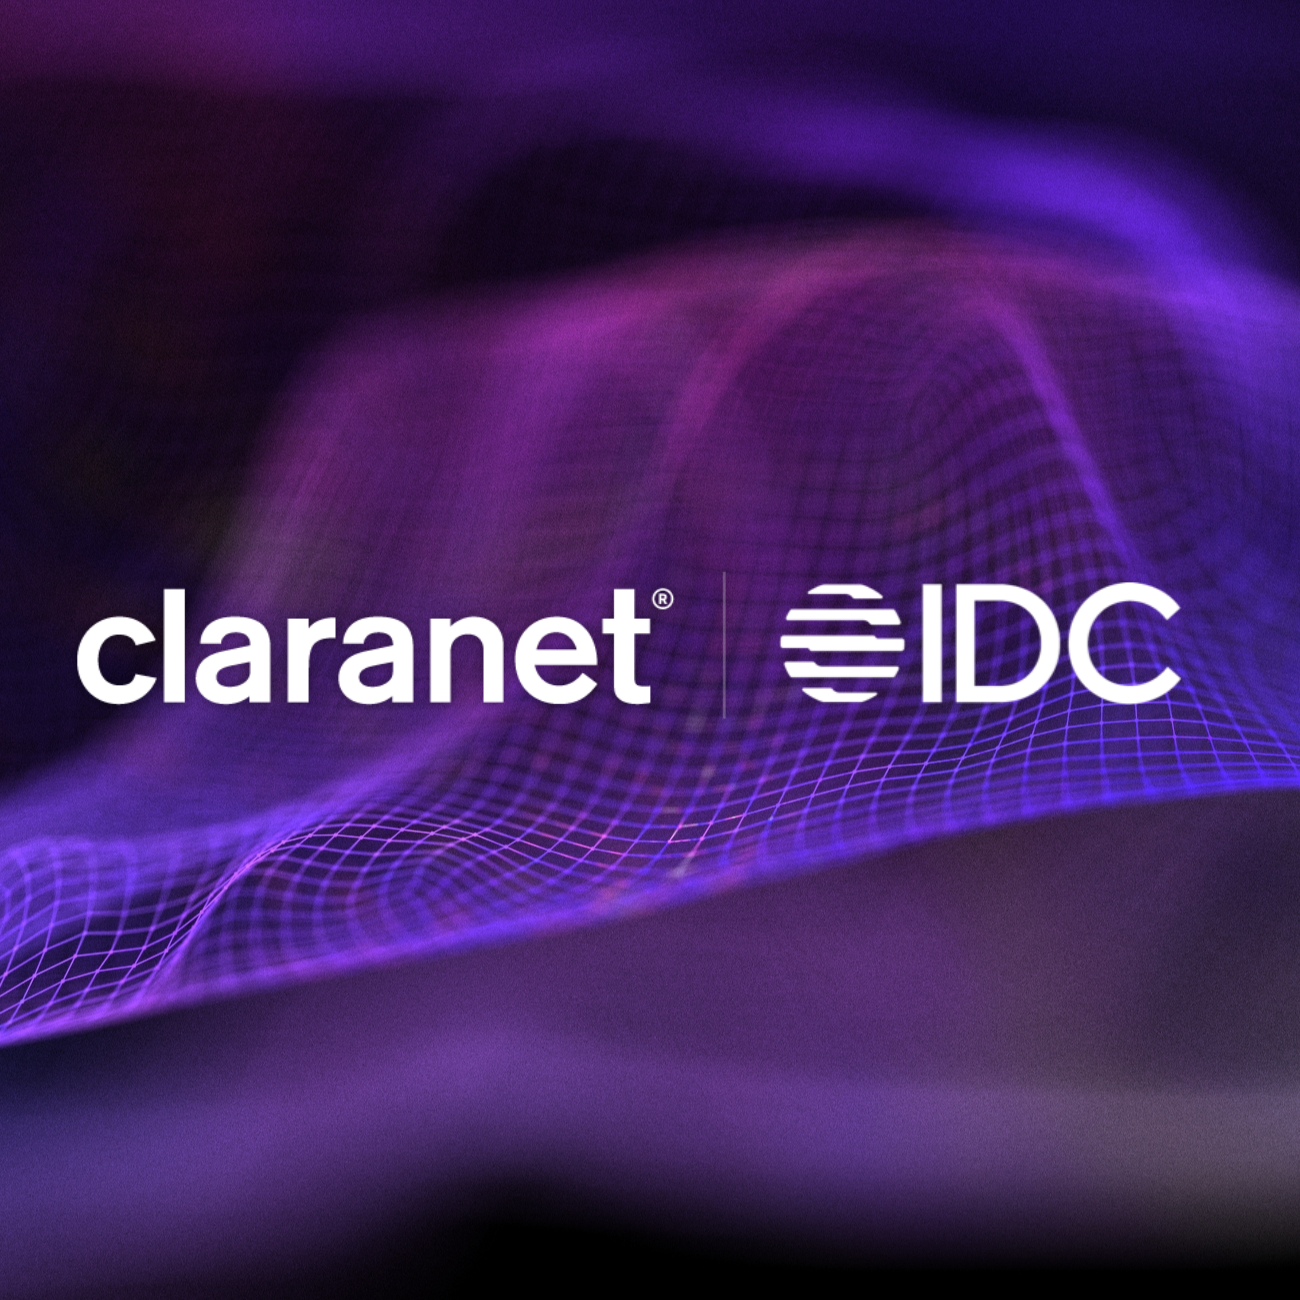 Claranet - IDC